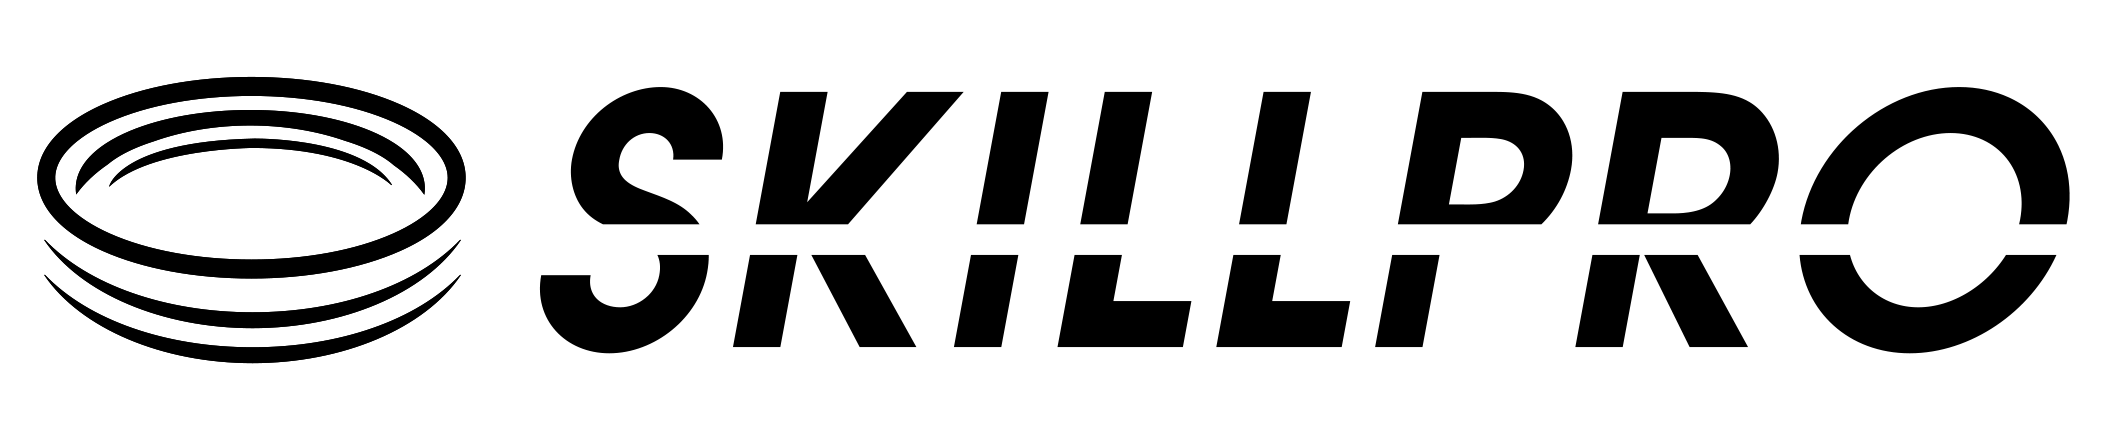 skillpro logo